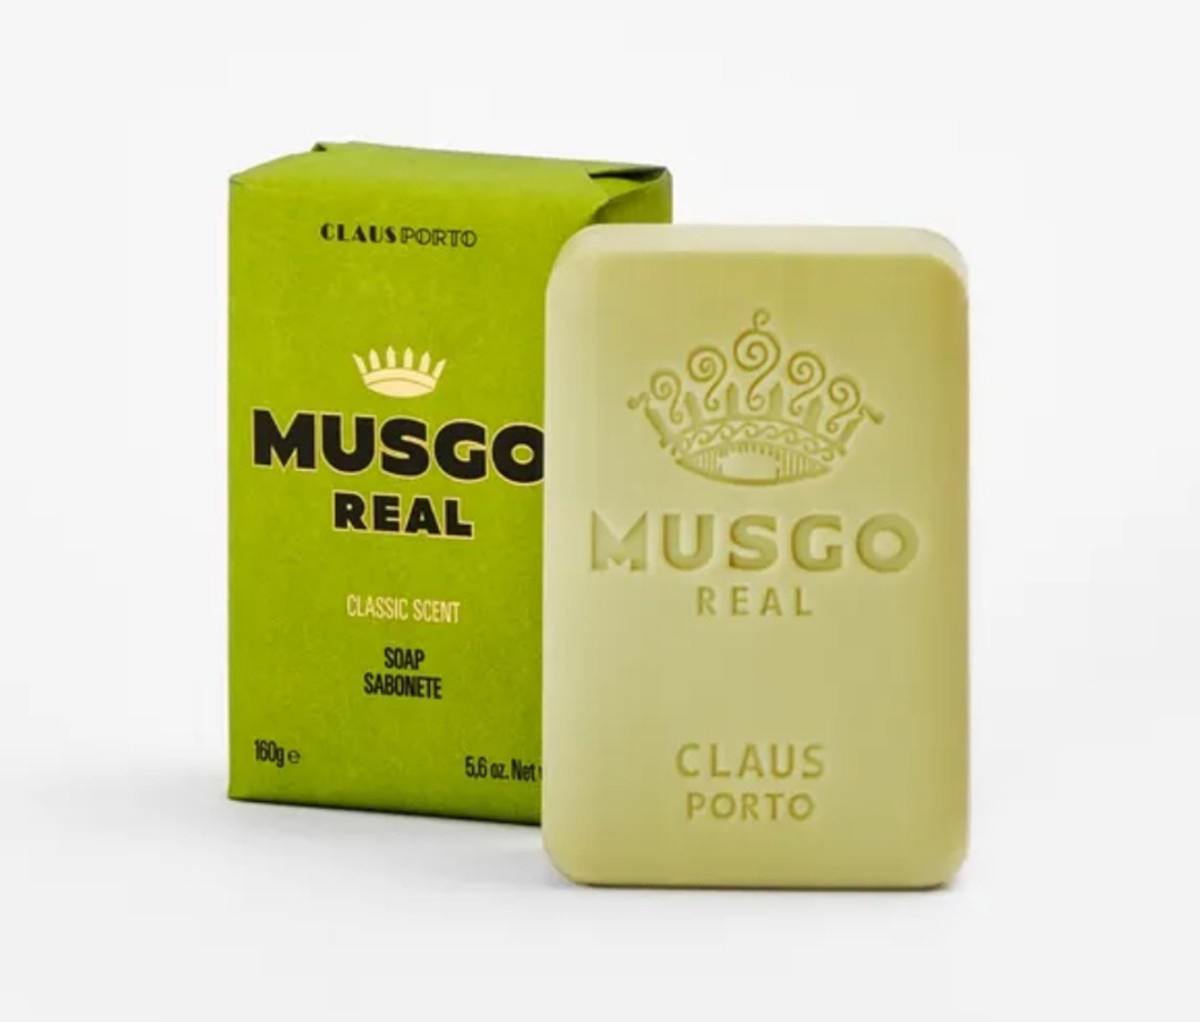 https://www.mensjournal.com/.image/t_share/MTk2MTM3MDE3NjQ4MjkzMDA5/13-claus-porto-classic-scent-body-soap.jpg